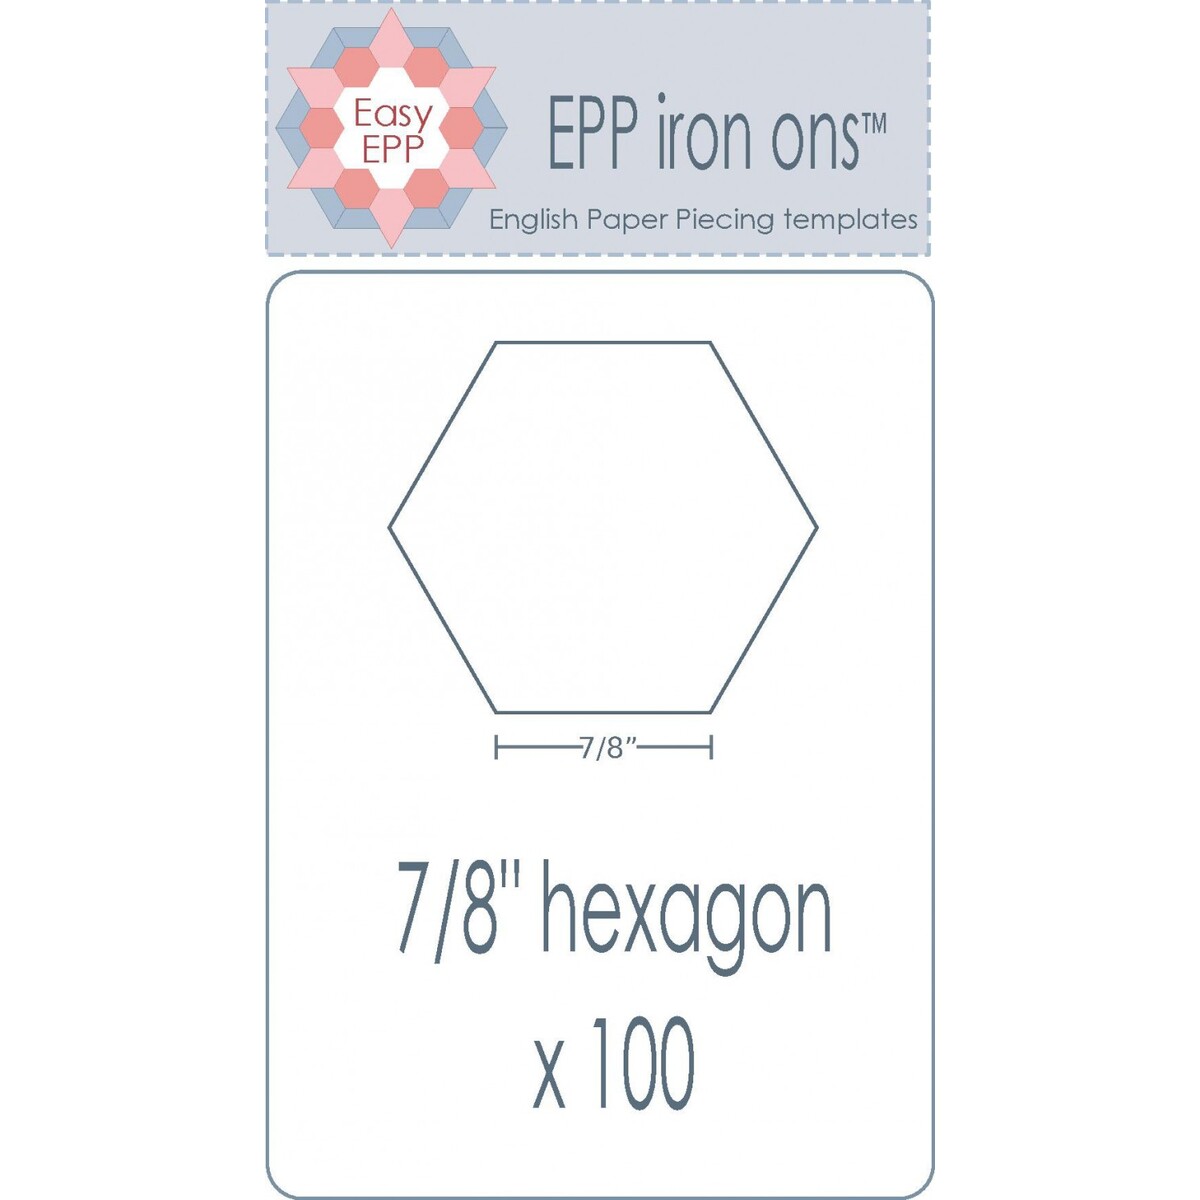 EPP Iron-Ons English Paper Piecing Templates *1 Hexagon - 100